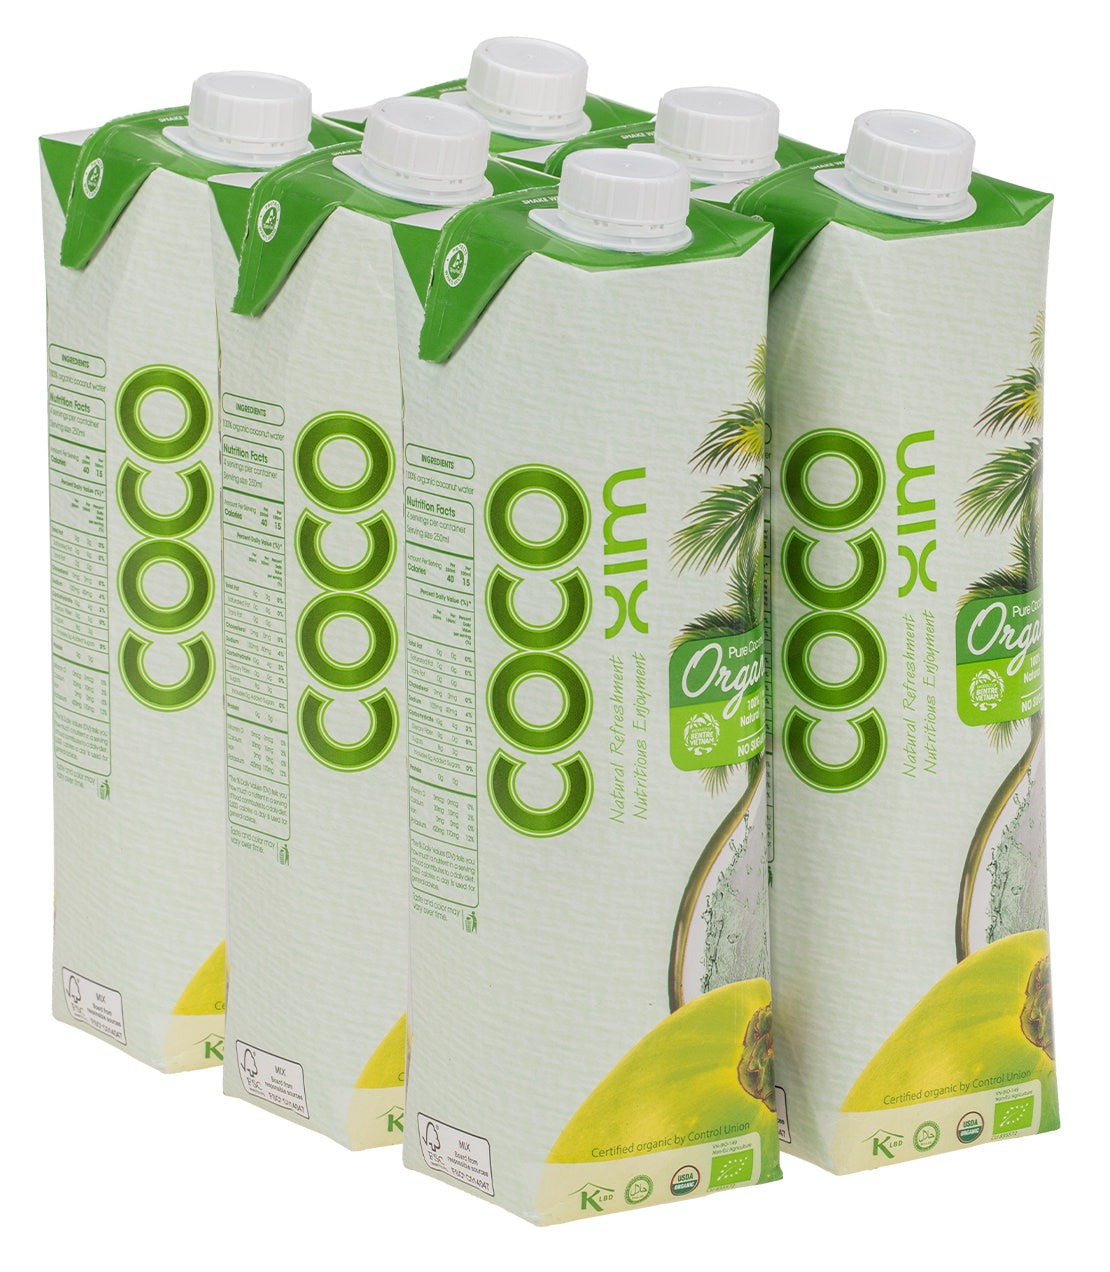 CocoXim Organic Coconut Water - 33 oz. Carton Case of 6 Cartons - Harney & Sons Fine Teas